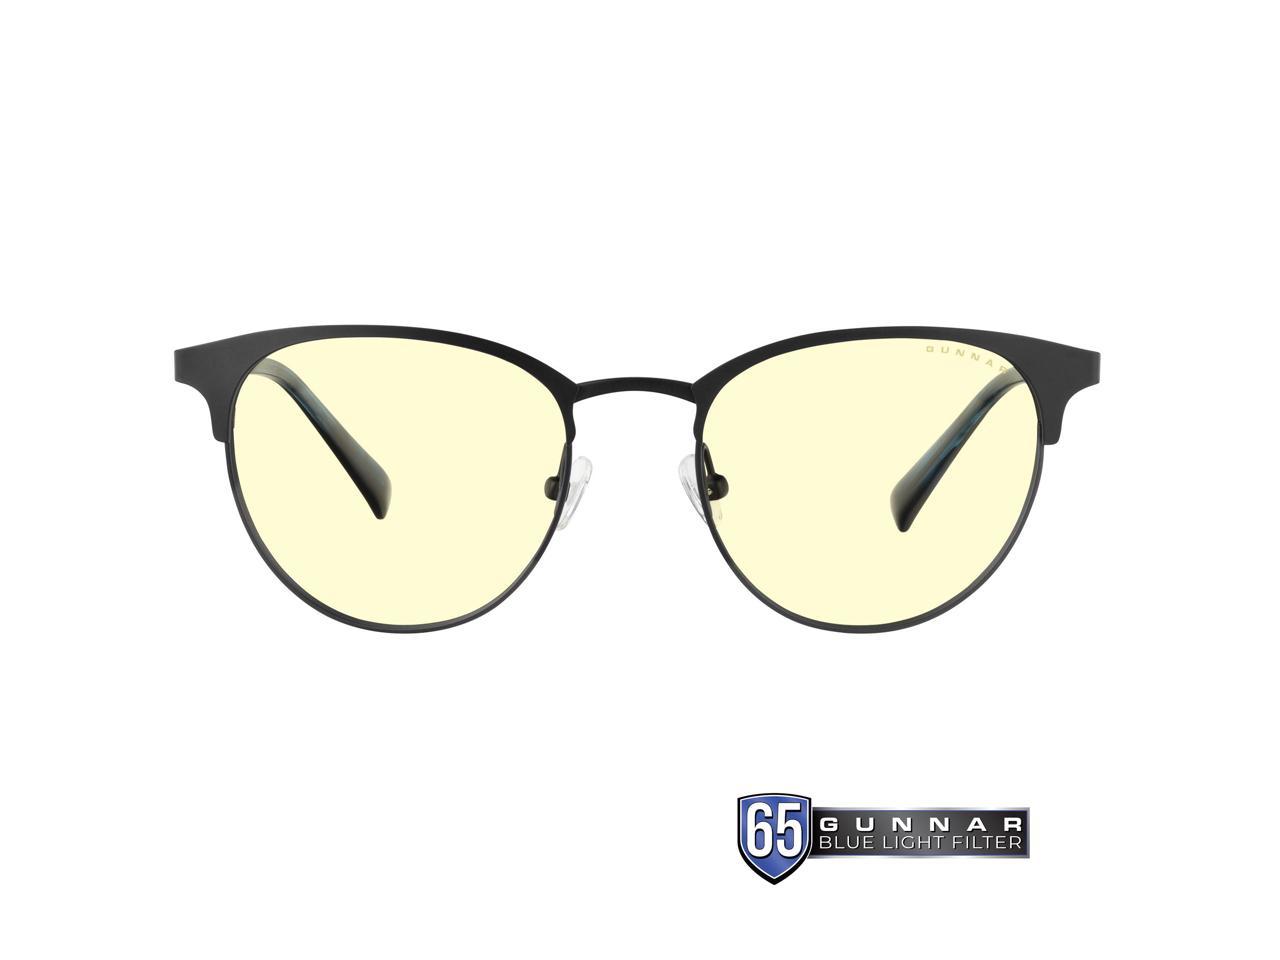 New Gunnar Attache Glasses Block Blue Light Anti-Glare Onyx/Liquet Sunglasses